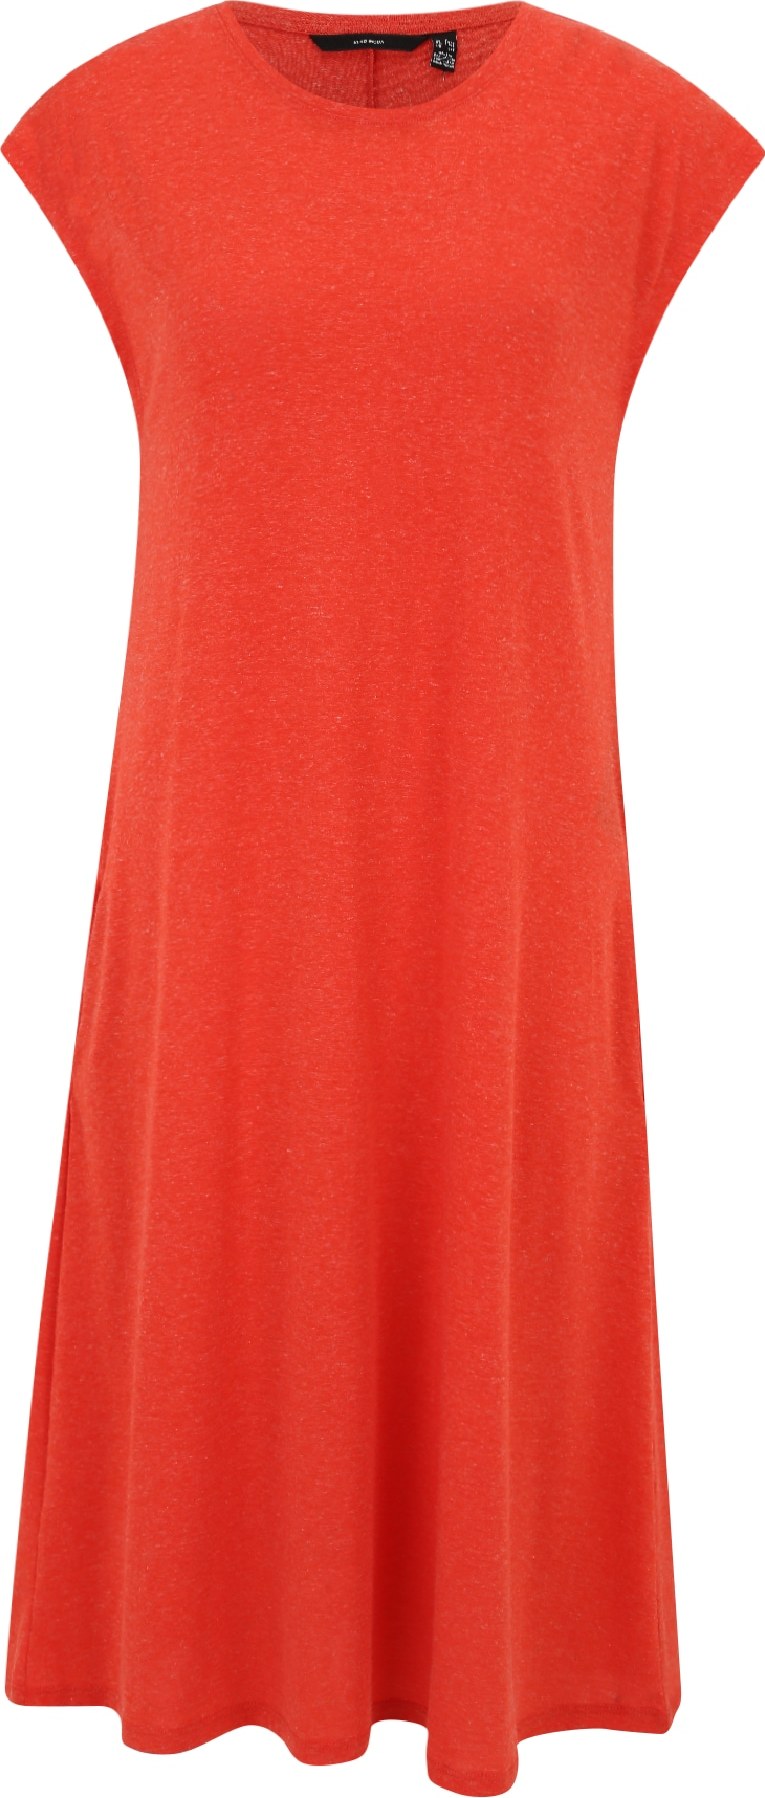 Vero Moda Tall Šaty 'JUNE' oranžově červená